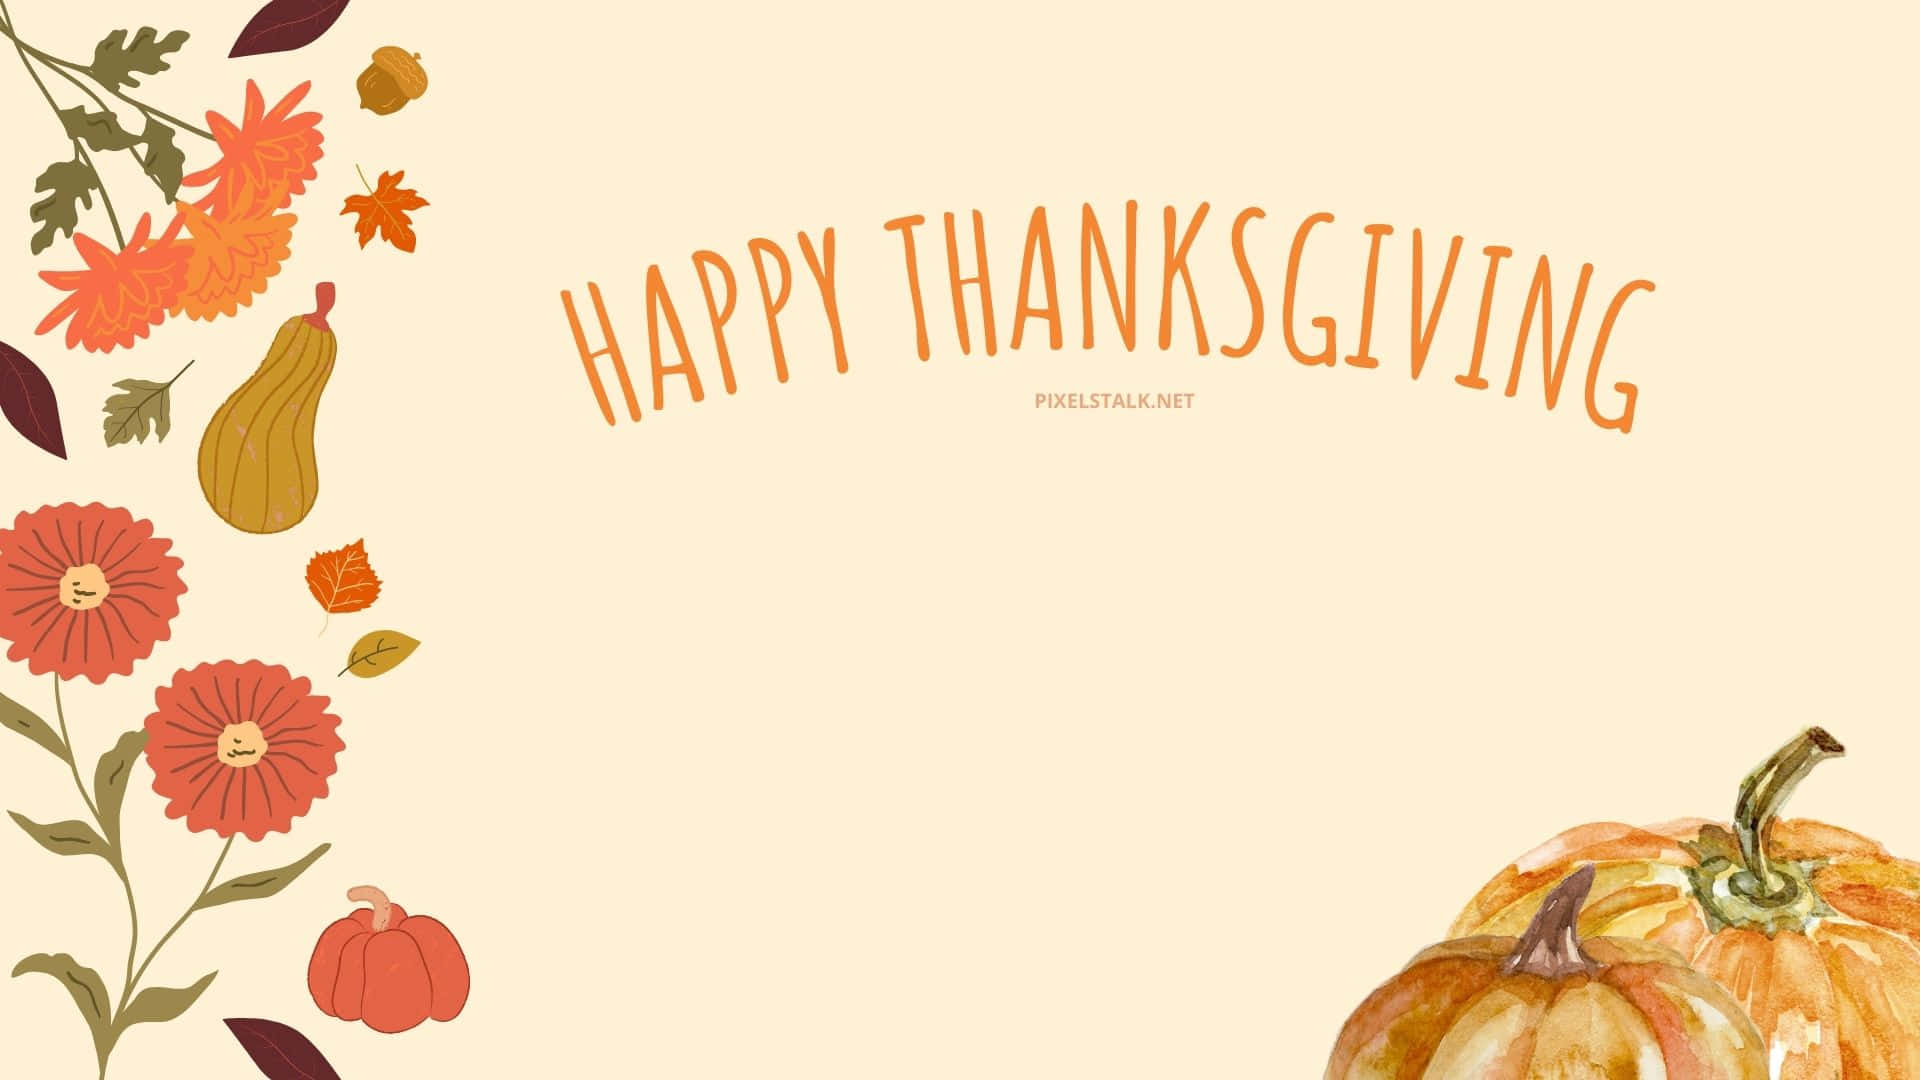 Happy Thanksgiving! Wallpaper